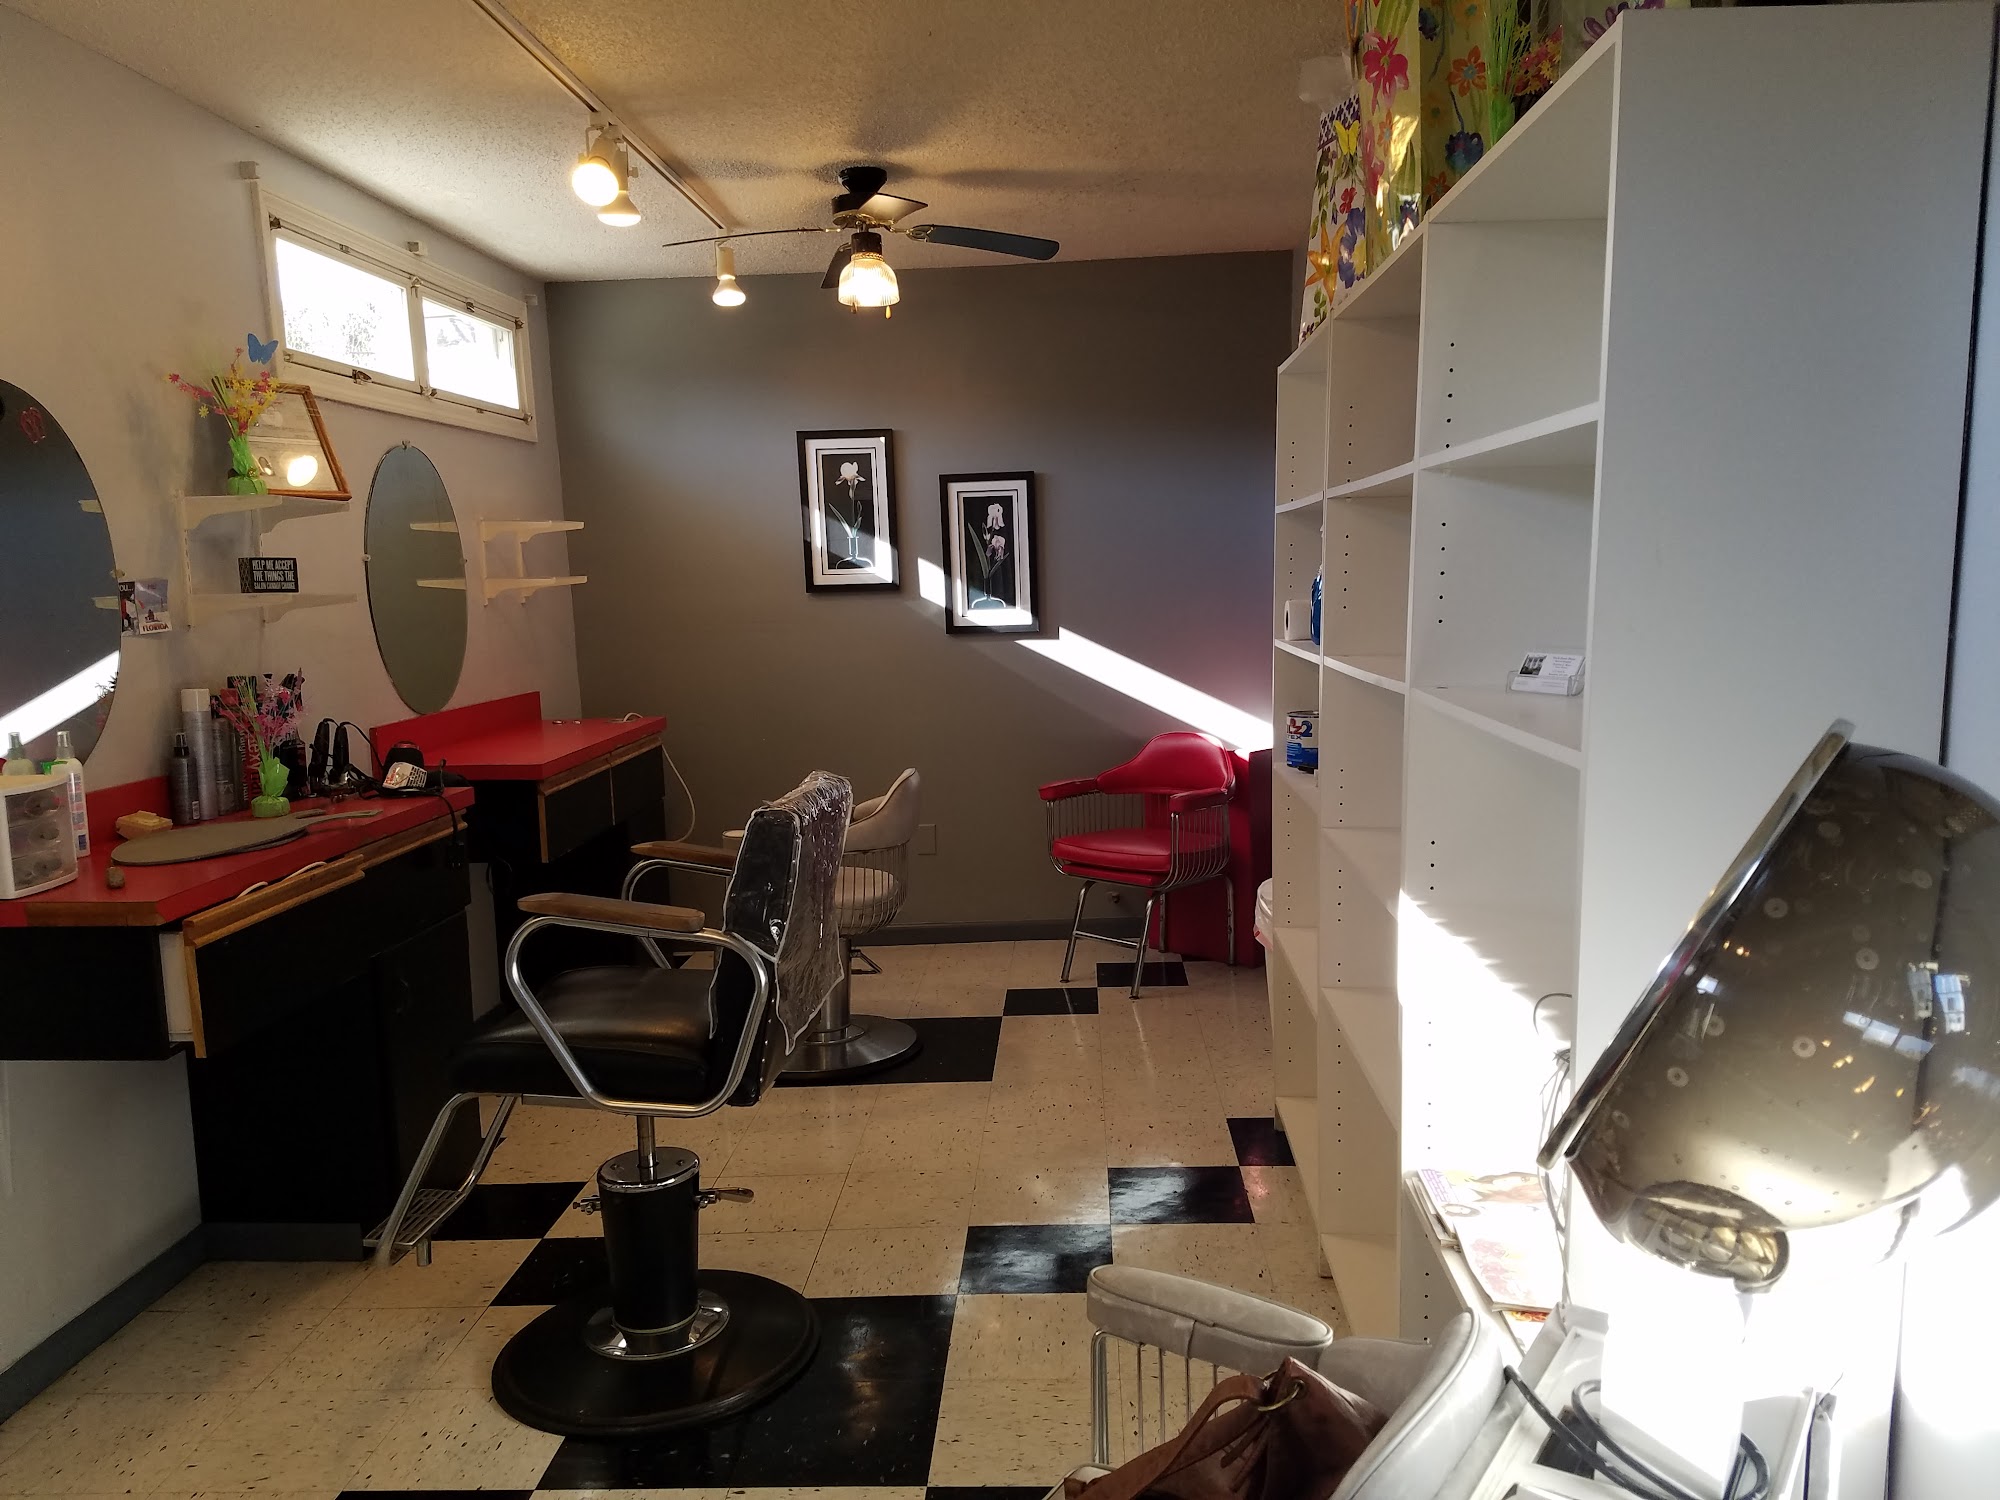 Shear Magic Salon/Permanent Makeup Studio 4530 NY-30, Amsterdam New York 12010